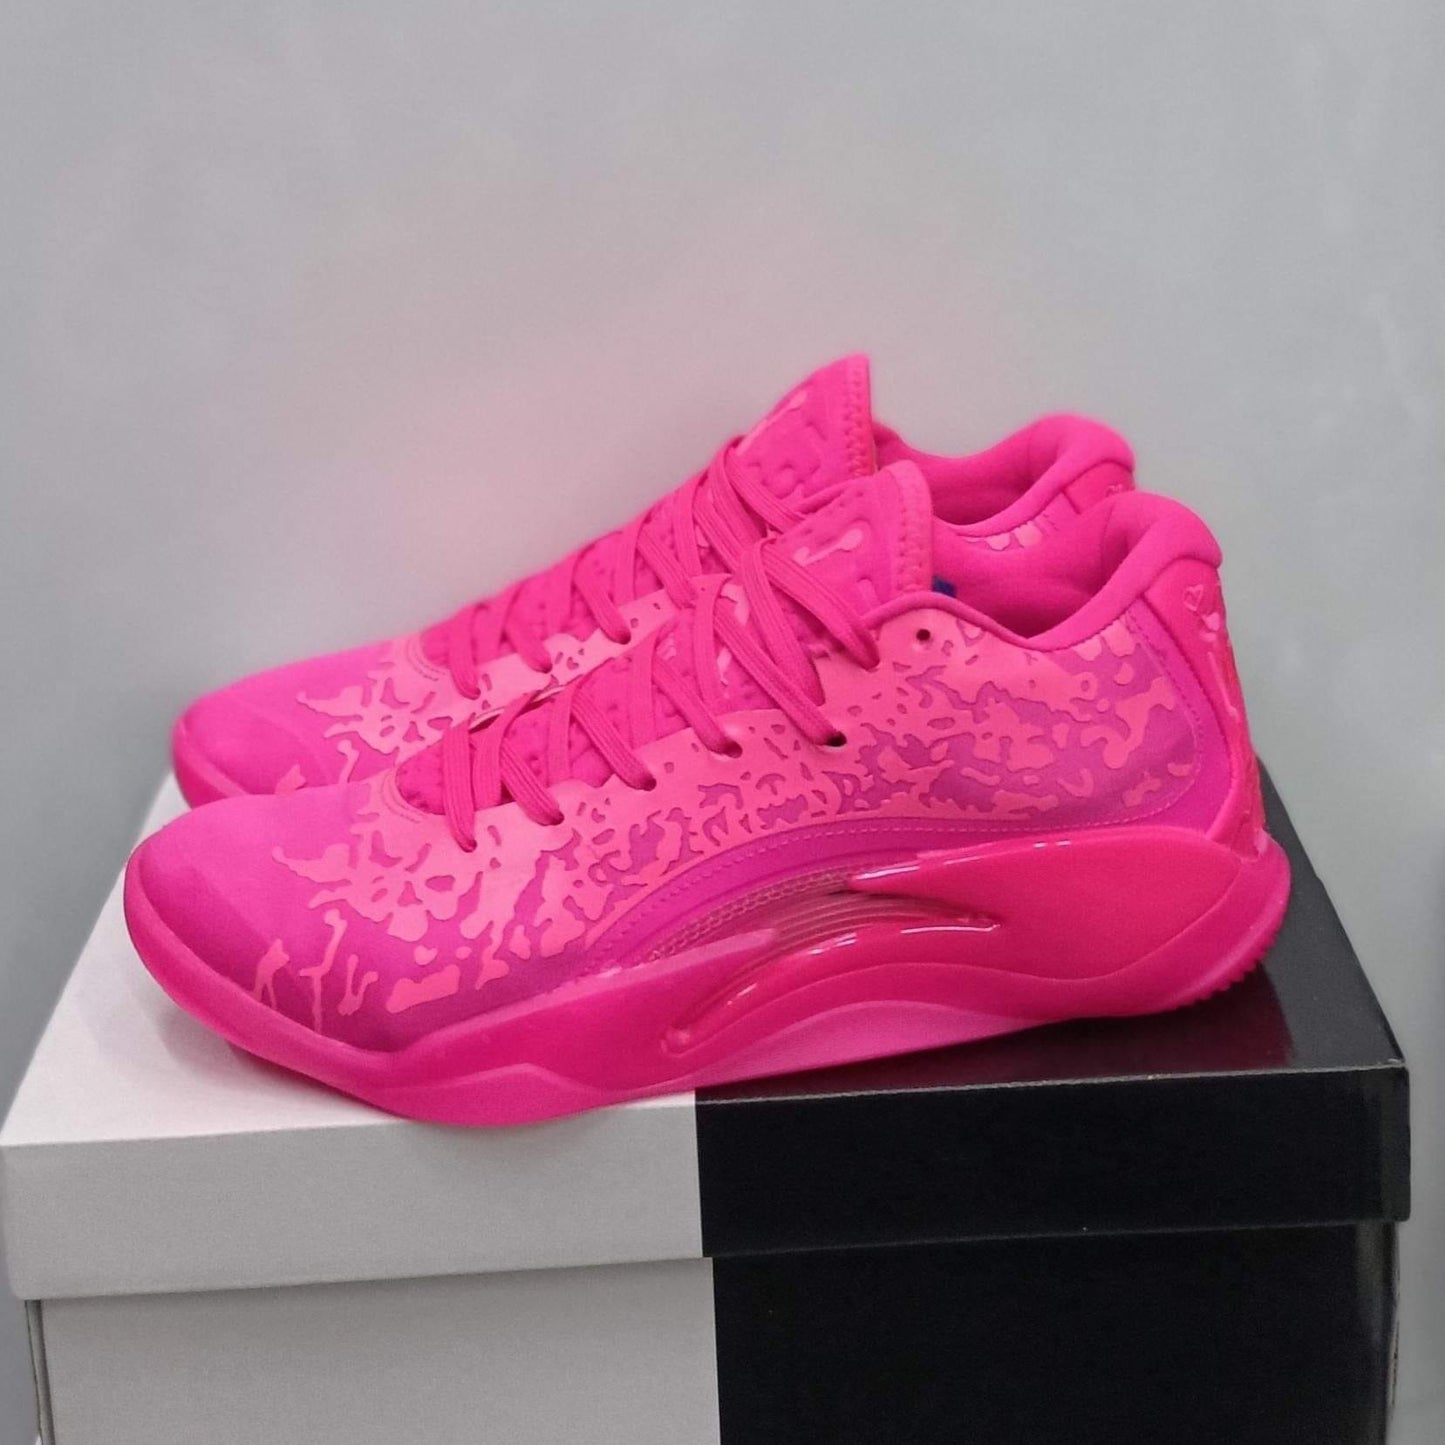 Jordan Zion 3.0 Pink